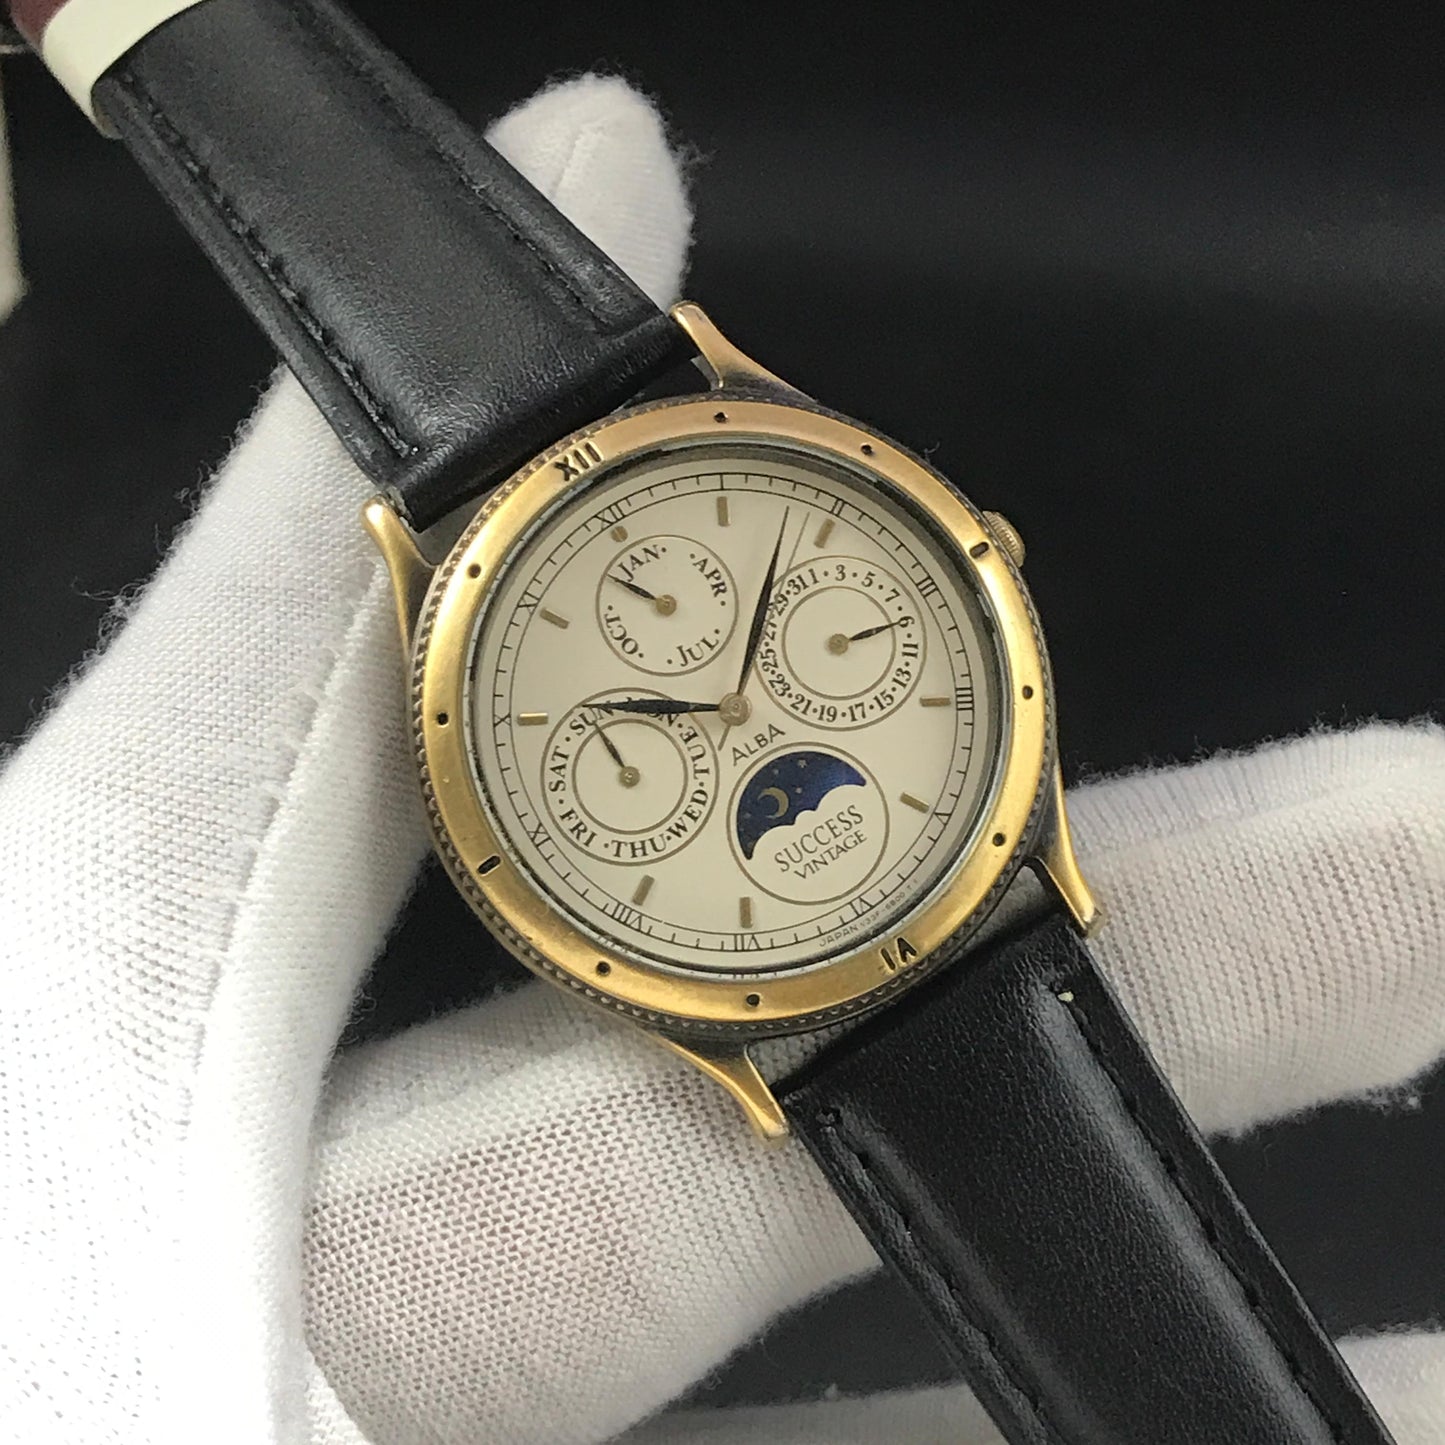 Vintage Seiko Alba Success Sun & Moon Triple Dial Japan Quartz Watch V33F-6B60